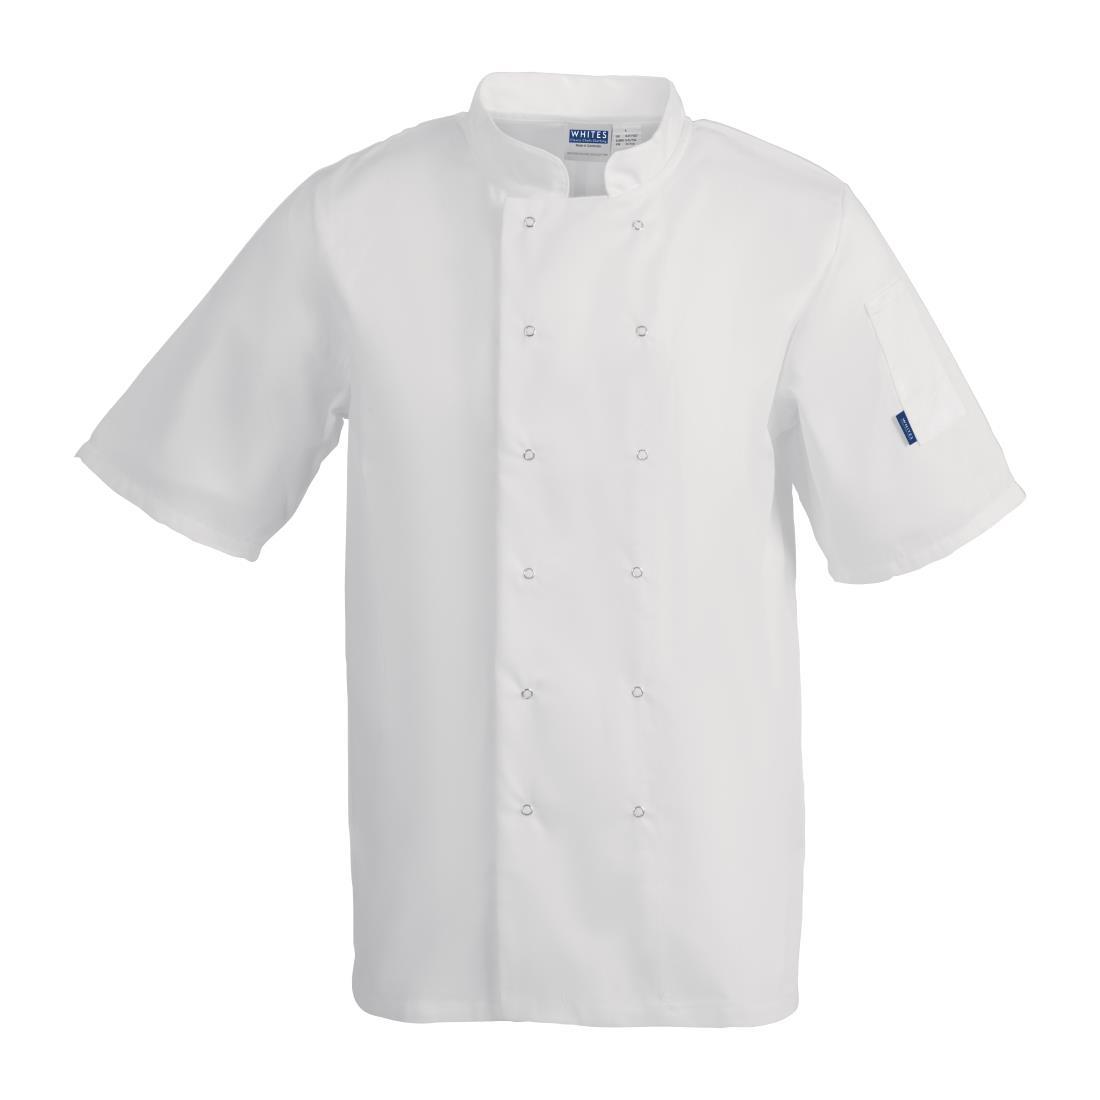 Whites Vegas Unisex Chefs Jacket Short Sleeve White S - A211-S  - 1